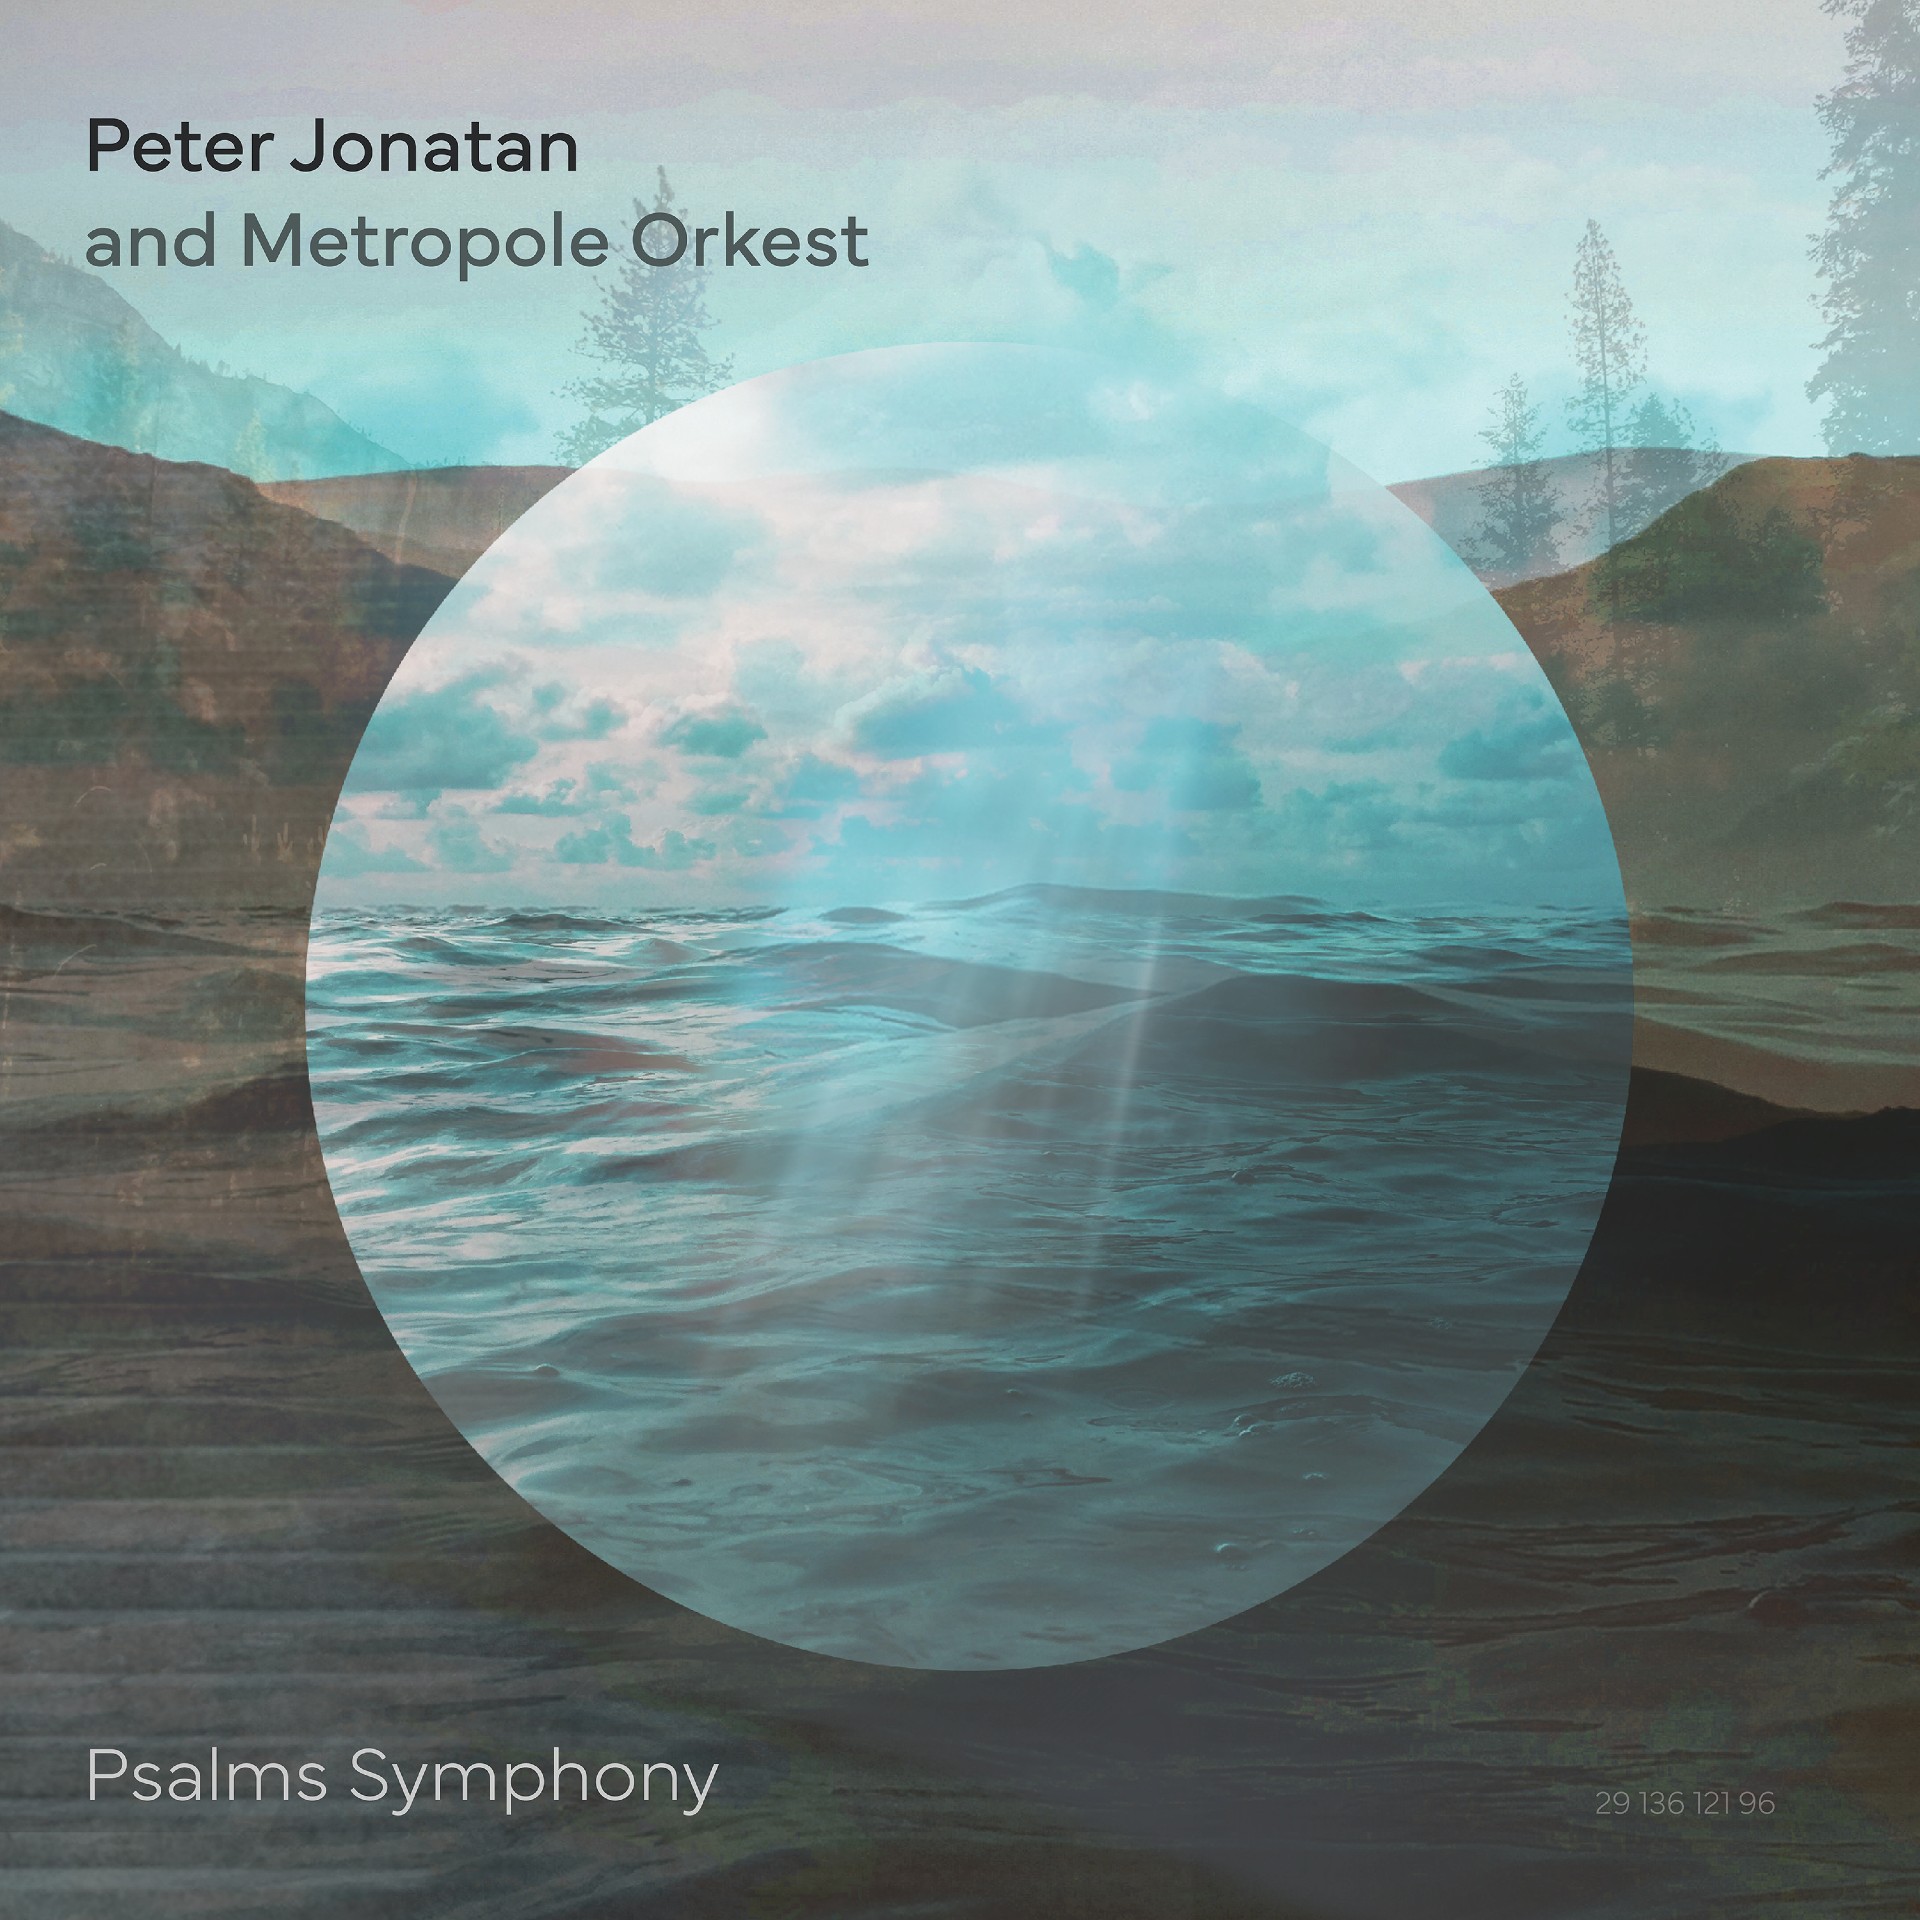 Peter Jonatan and Metropole Orkest ‘Psalms Symphony’ album artwork